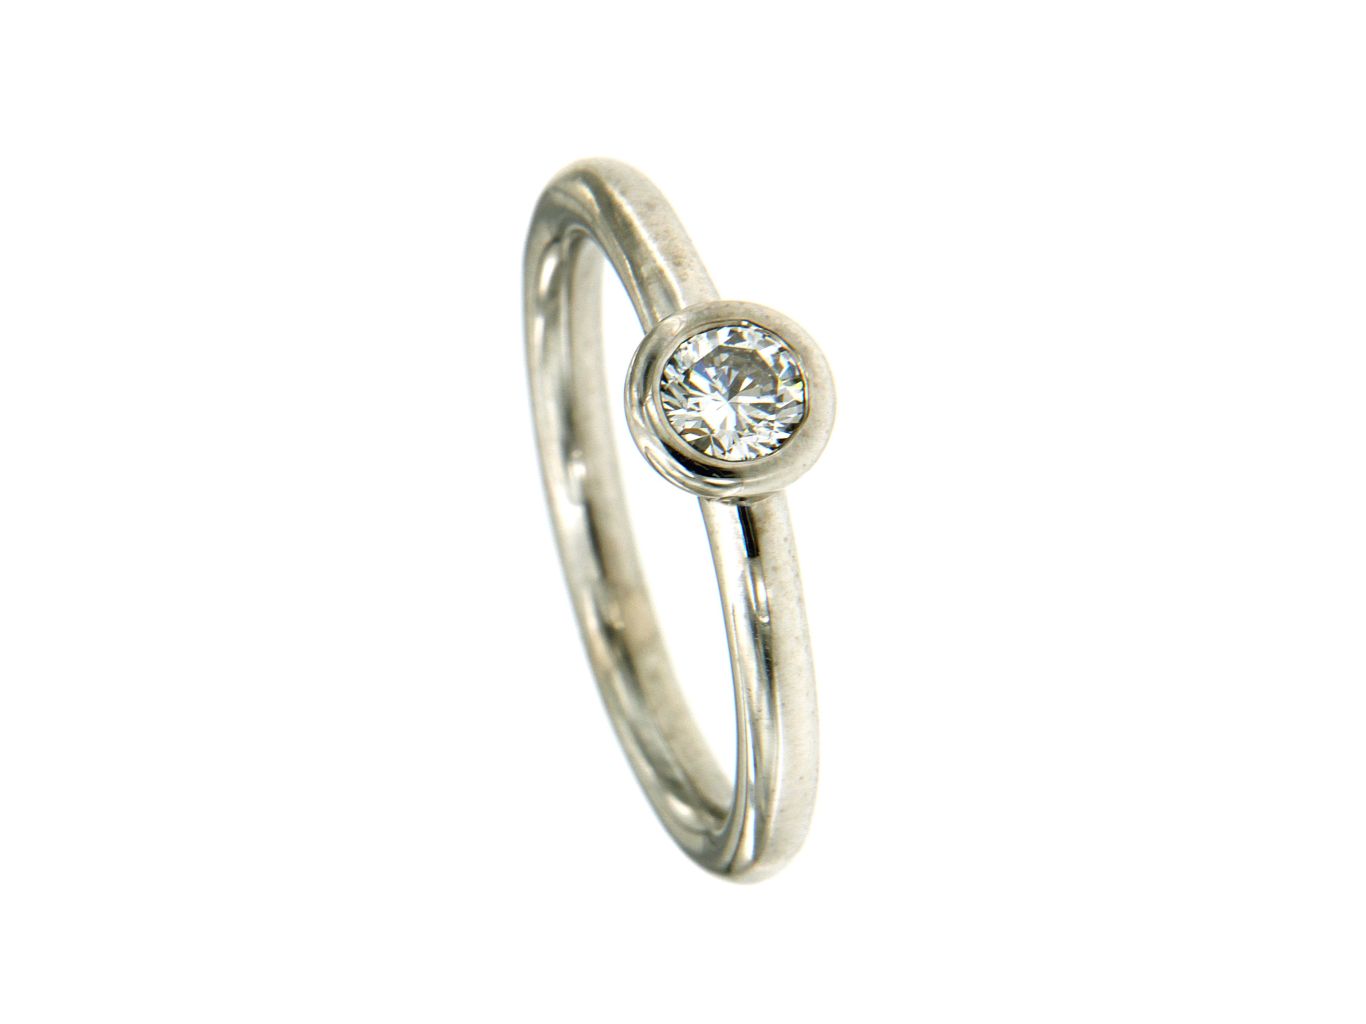 Ring Weissgold 750 mit Diamant 0.41 Kt Farbe F, Klarheit VS2